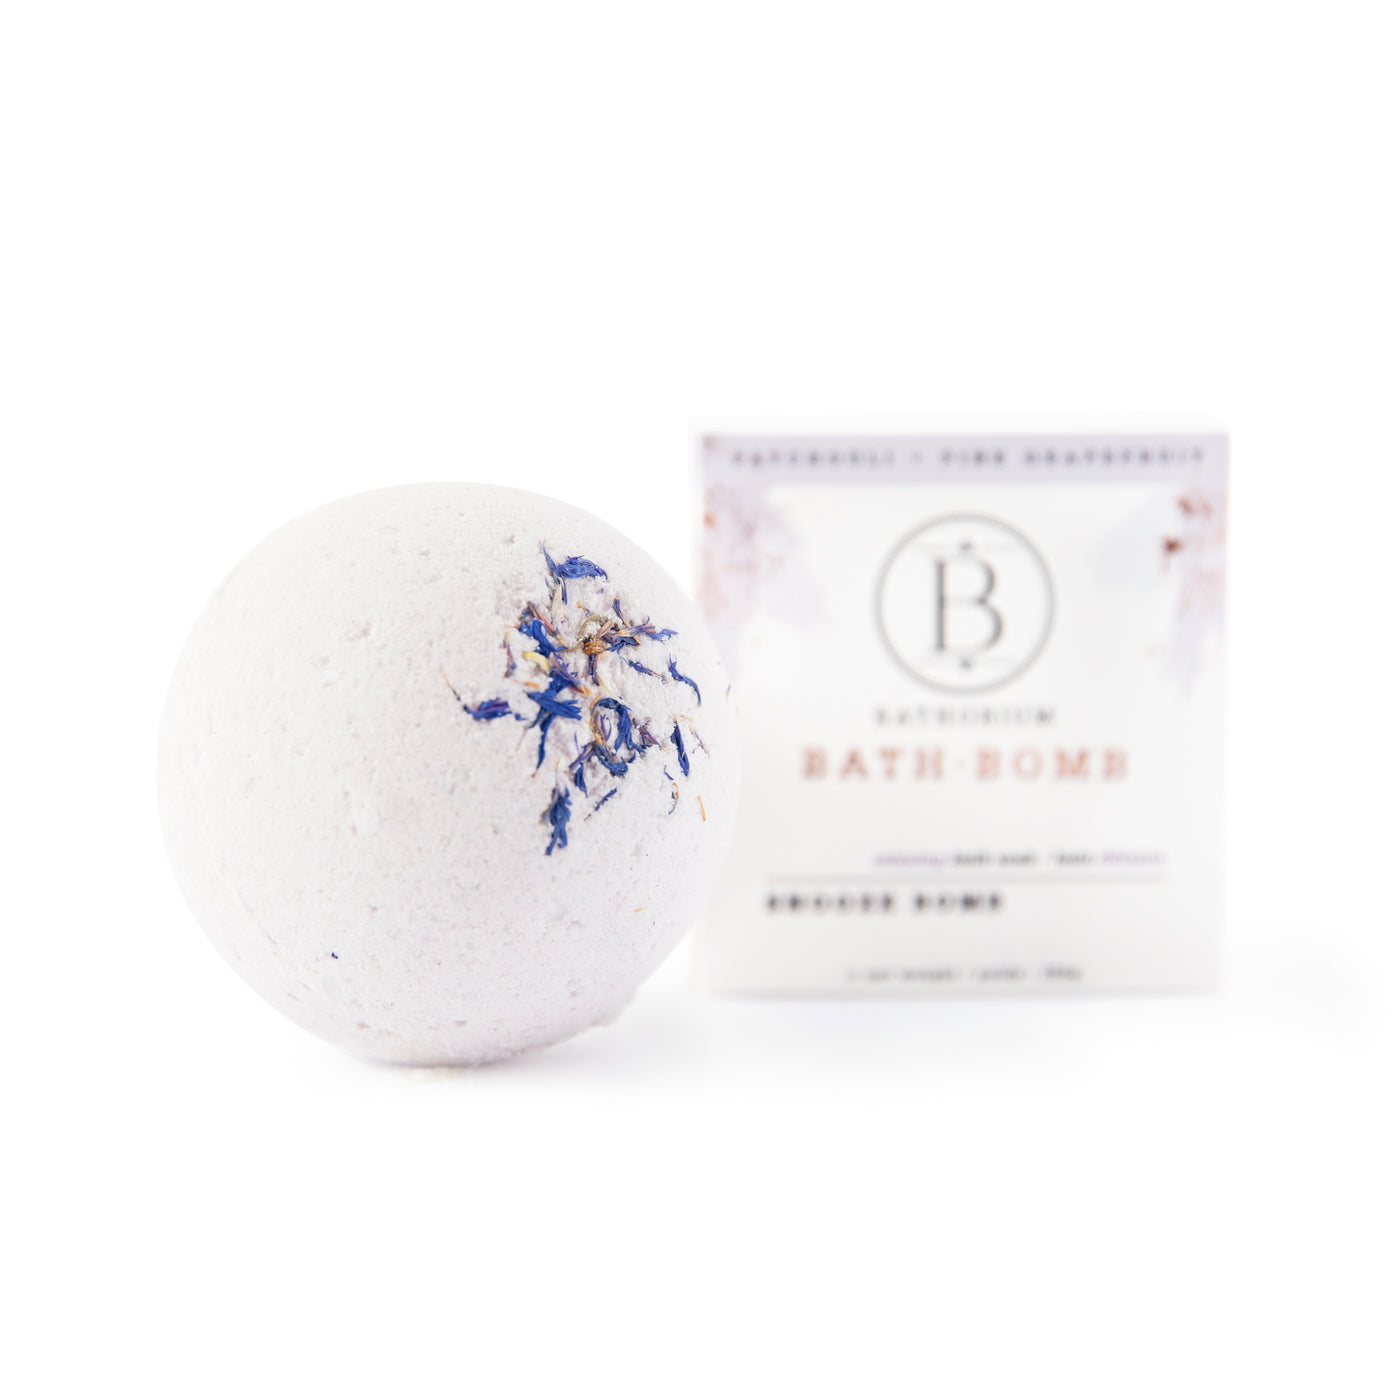 Snooze Bomb Bath Bomb - Radiance Clean Beauty